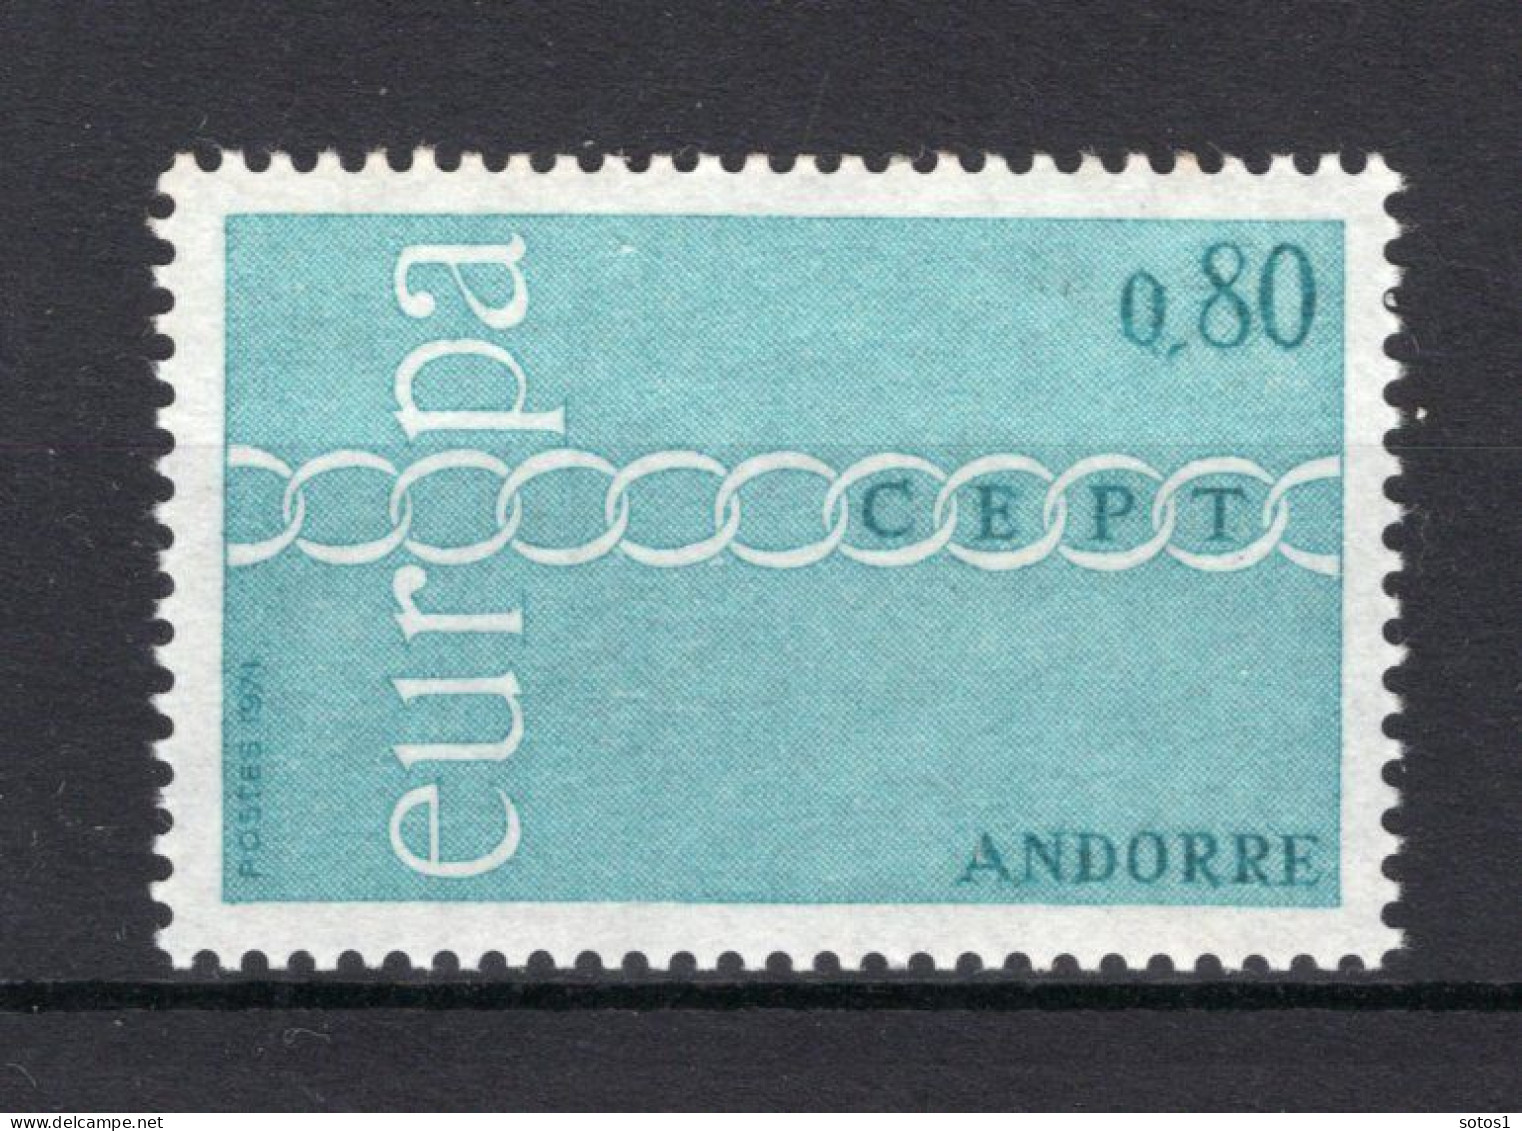 (B) Andorra (Franse Post) CEPT 233 MNH - 1971 - 1971